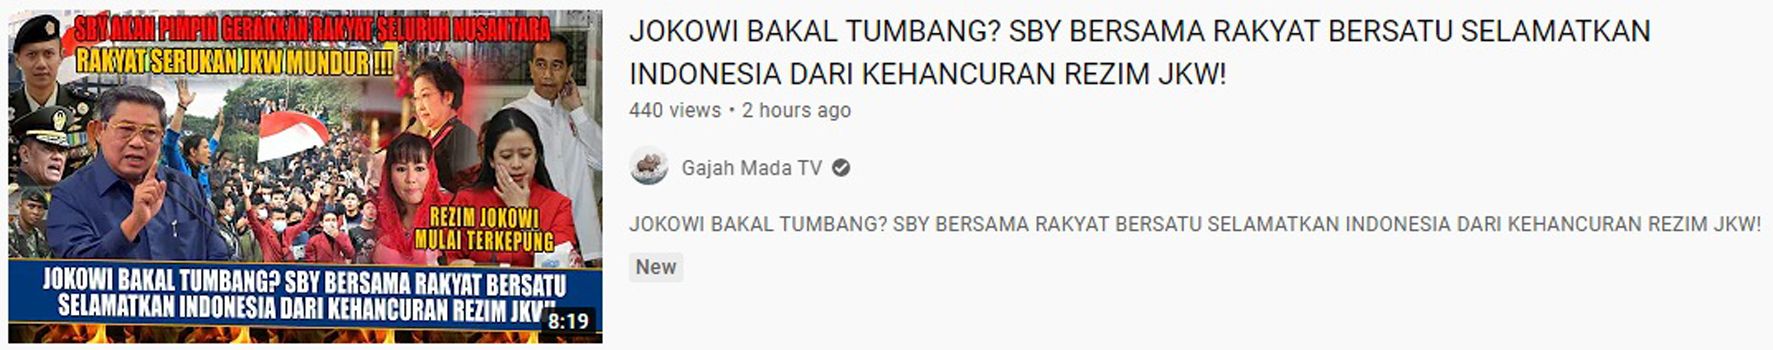 Klaim Hoax Video Jokowi Bakal Tumbang? SBY Bersama Rakyat Bersatu Selamatkan Indonesia dari Kehancuran Rezim JKW!